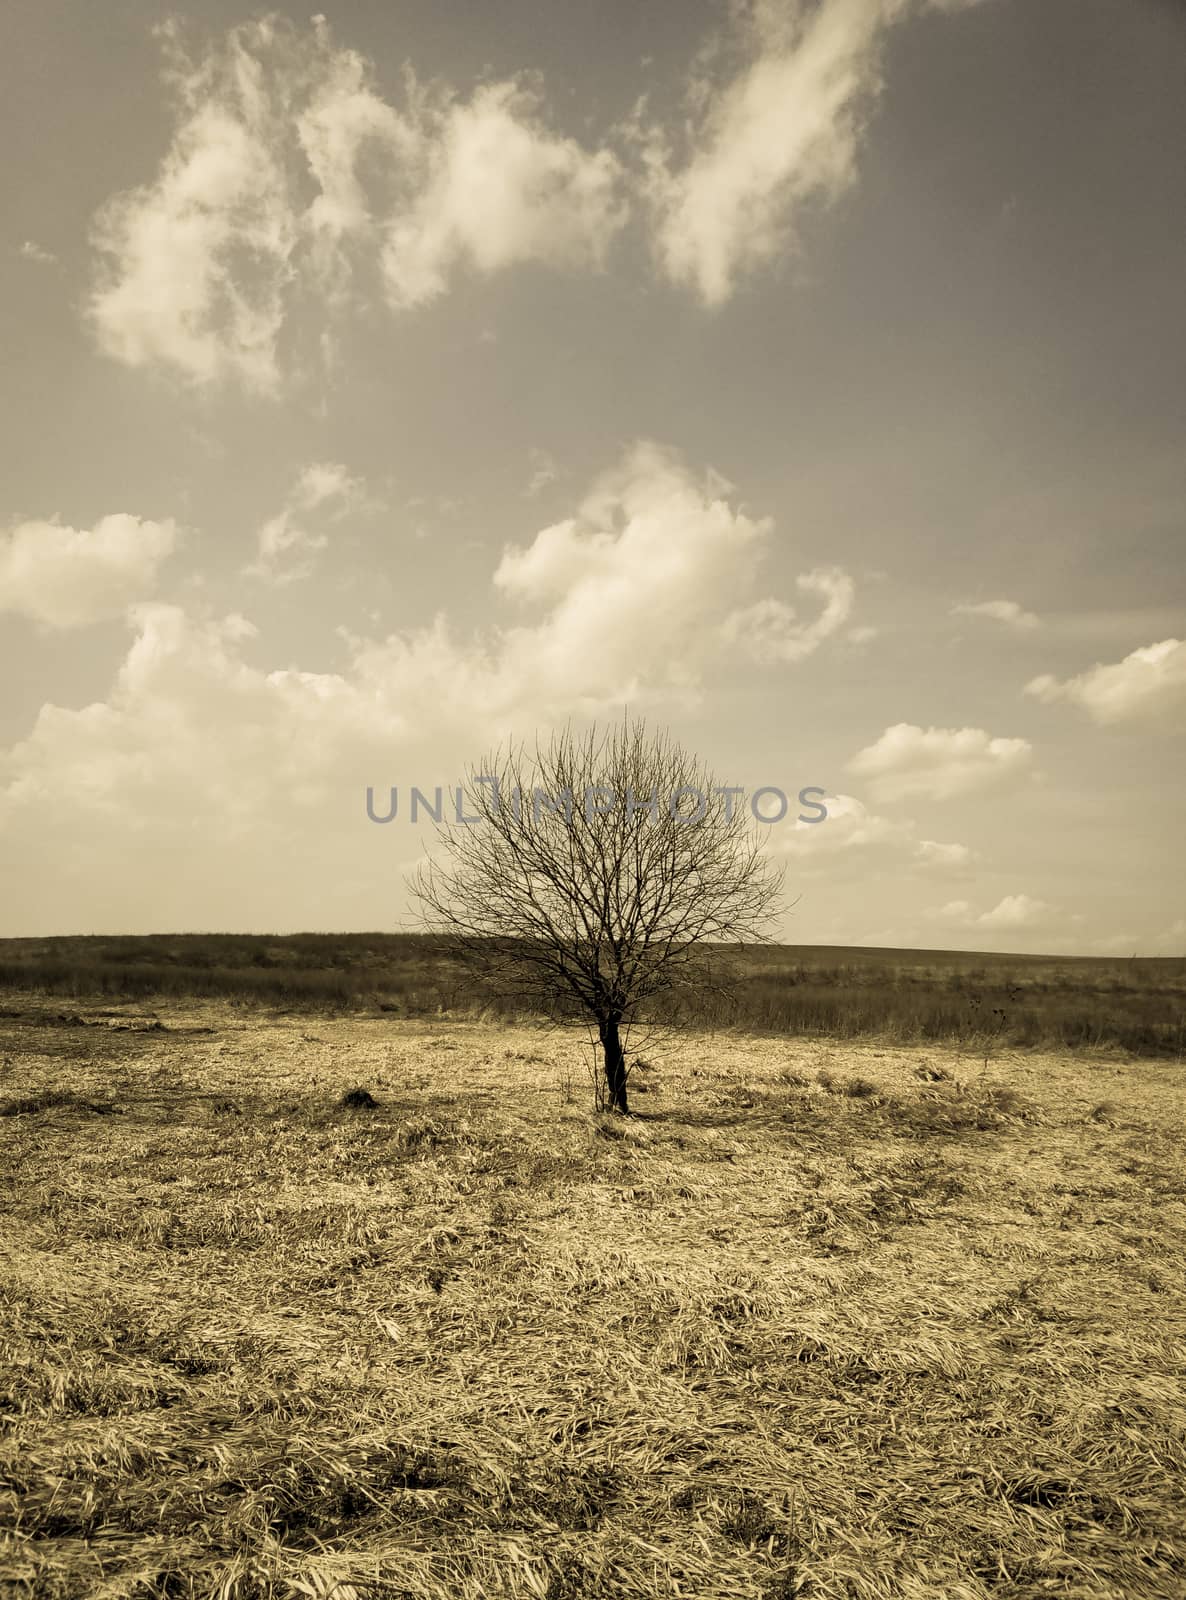 lonely tree in a field of beautiful landscape photo effect by Oleczka11